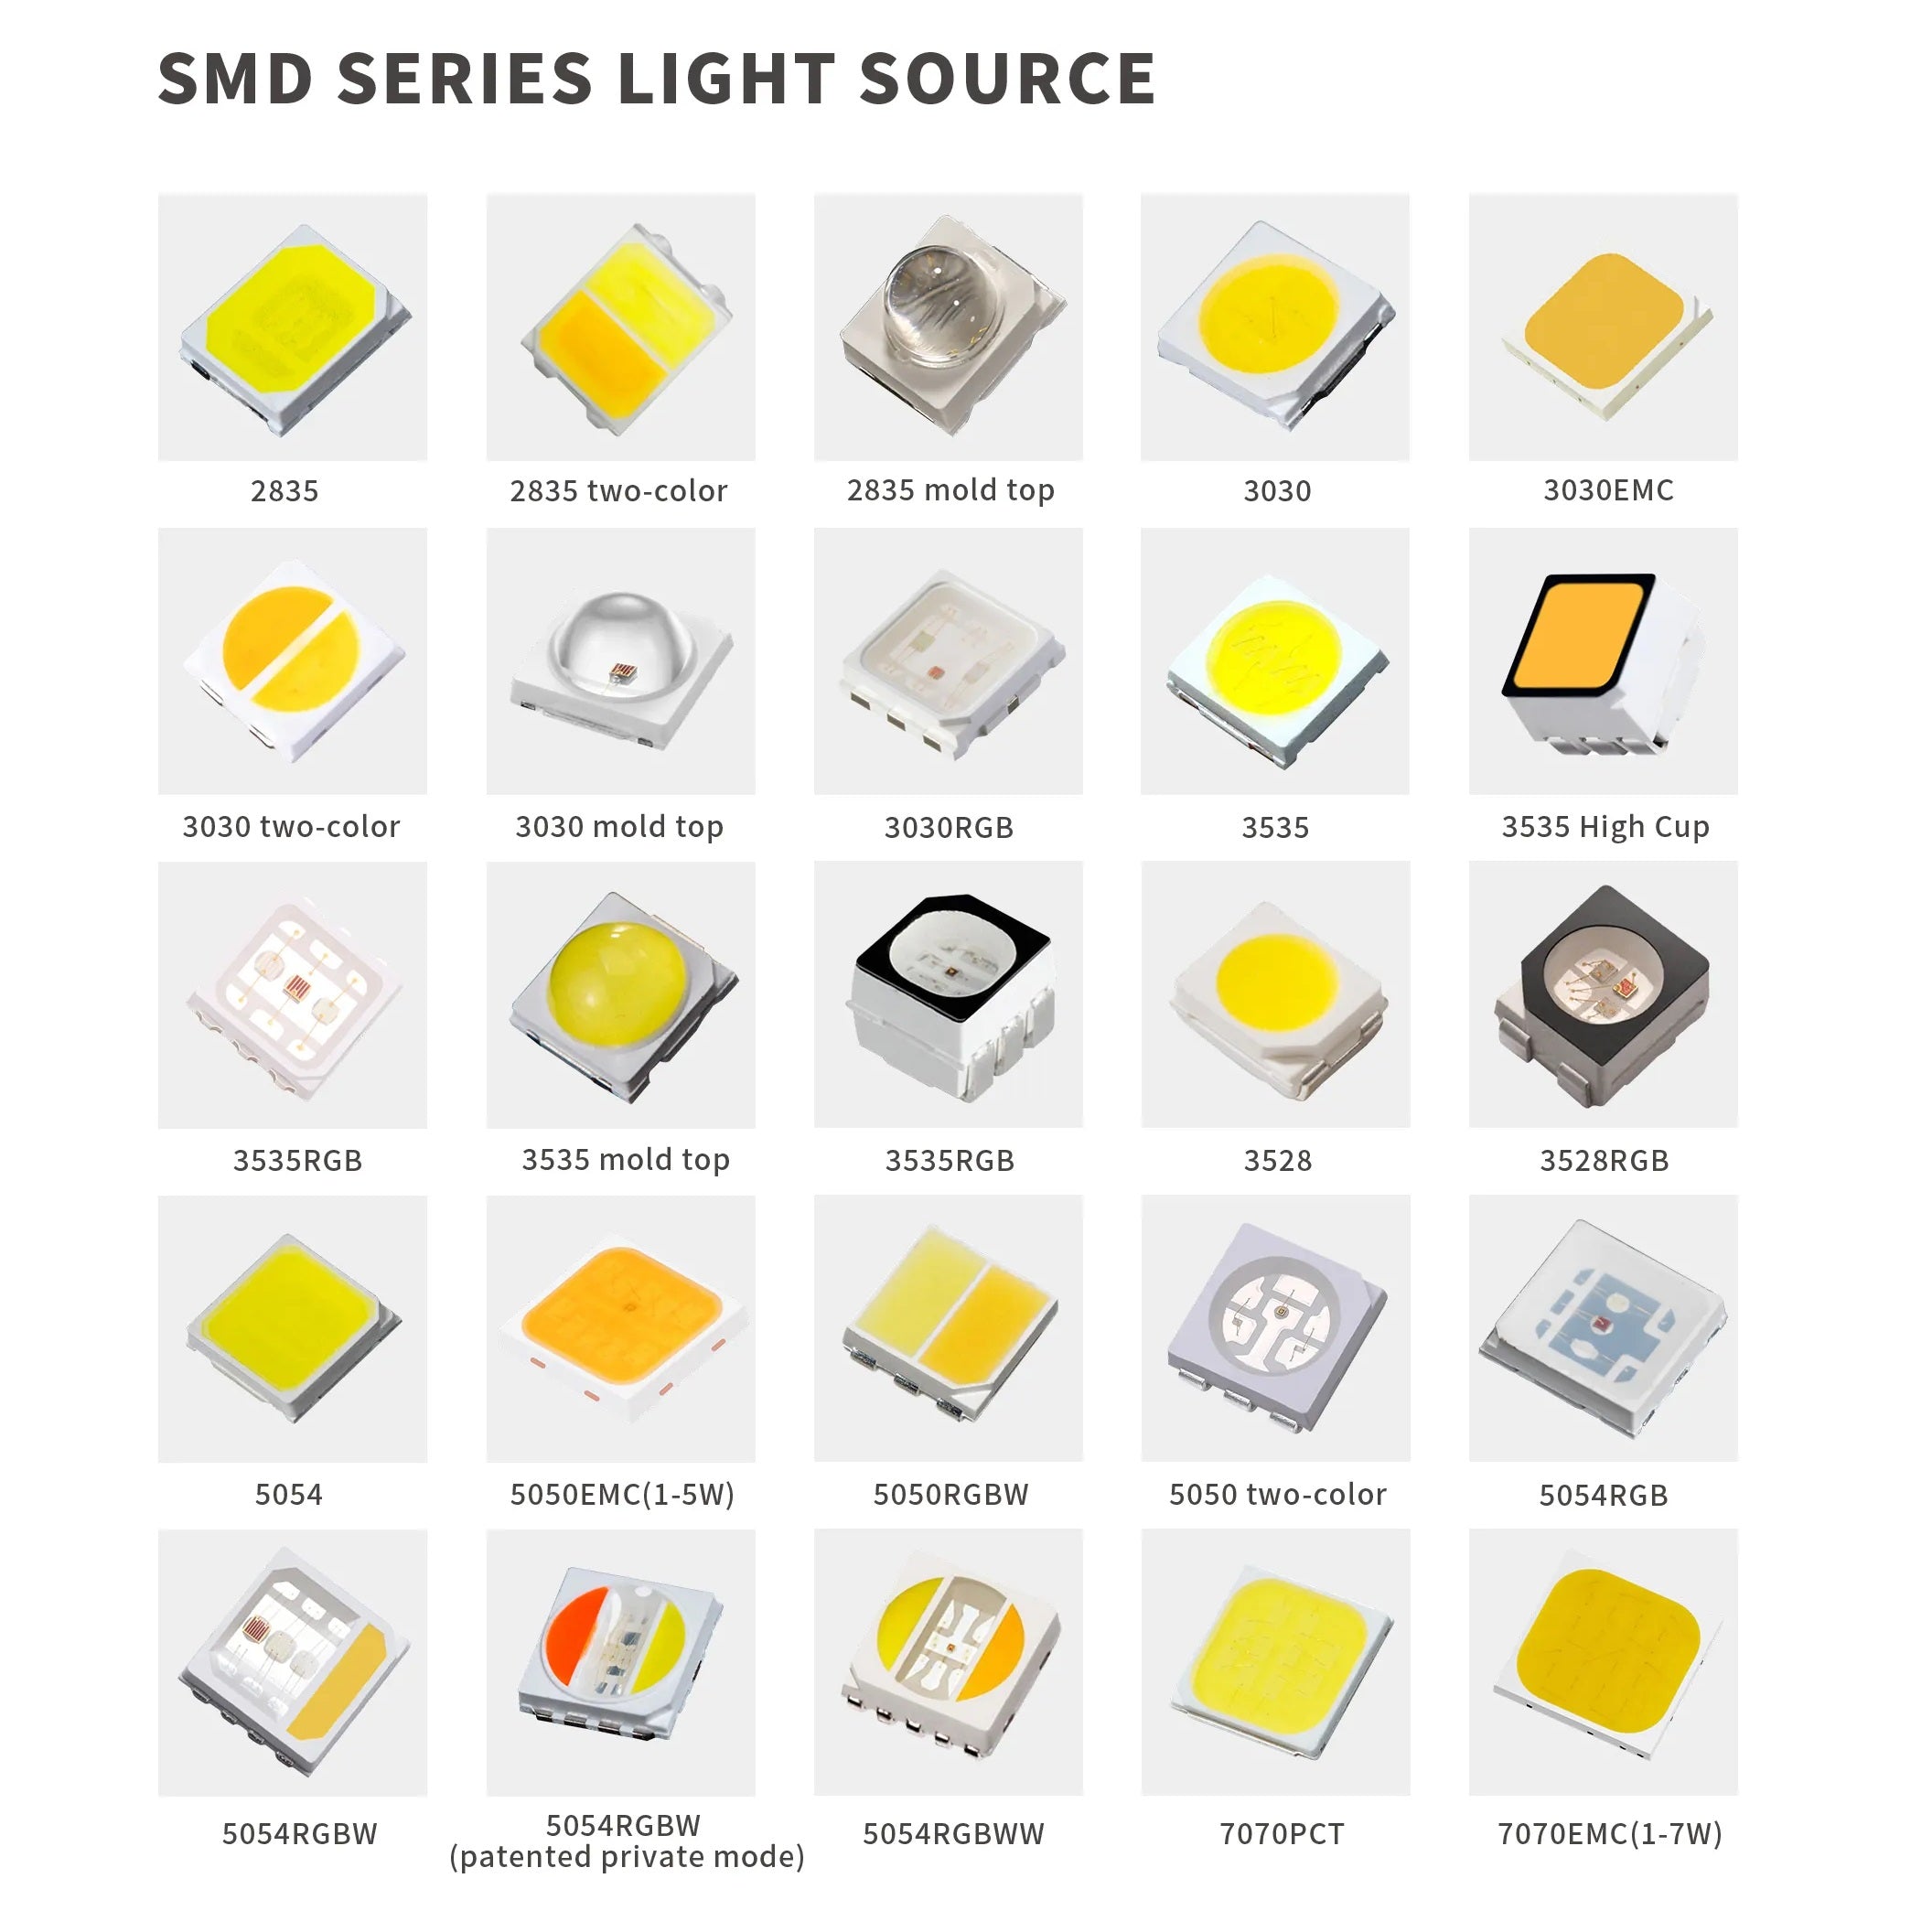 3535 5W Ceramic SMD LED Light Chip